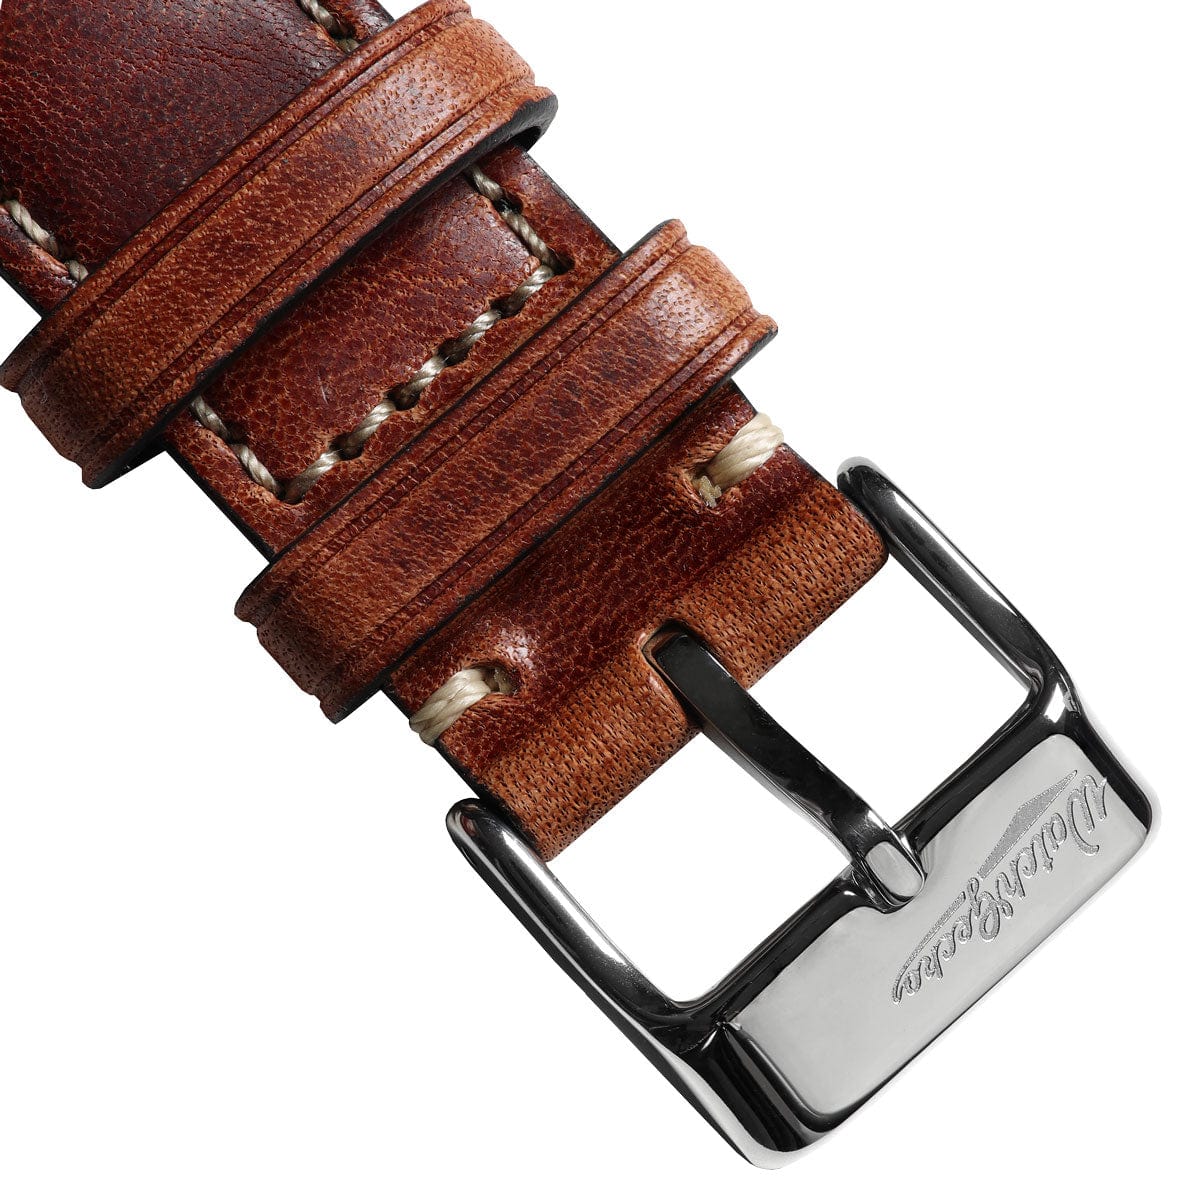 Vintage Highley Genuine Leather Watch Strap - Reddish Brown